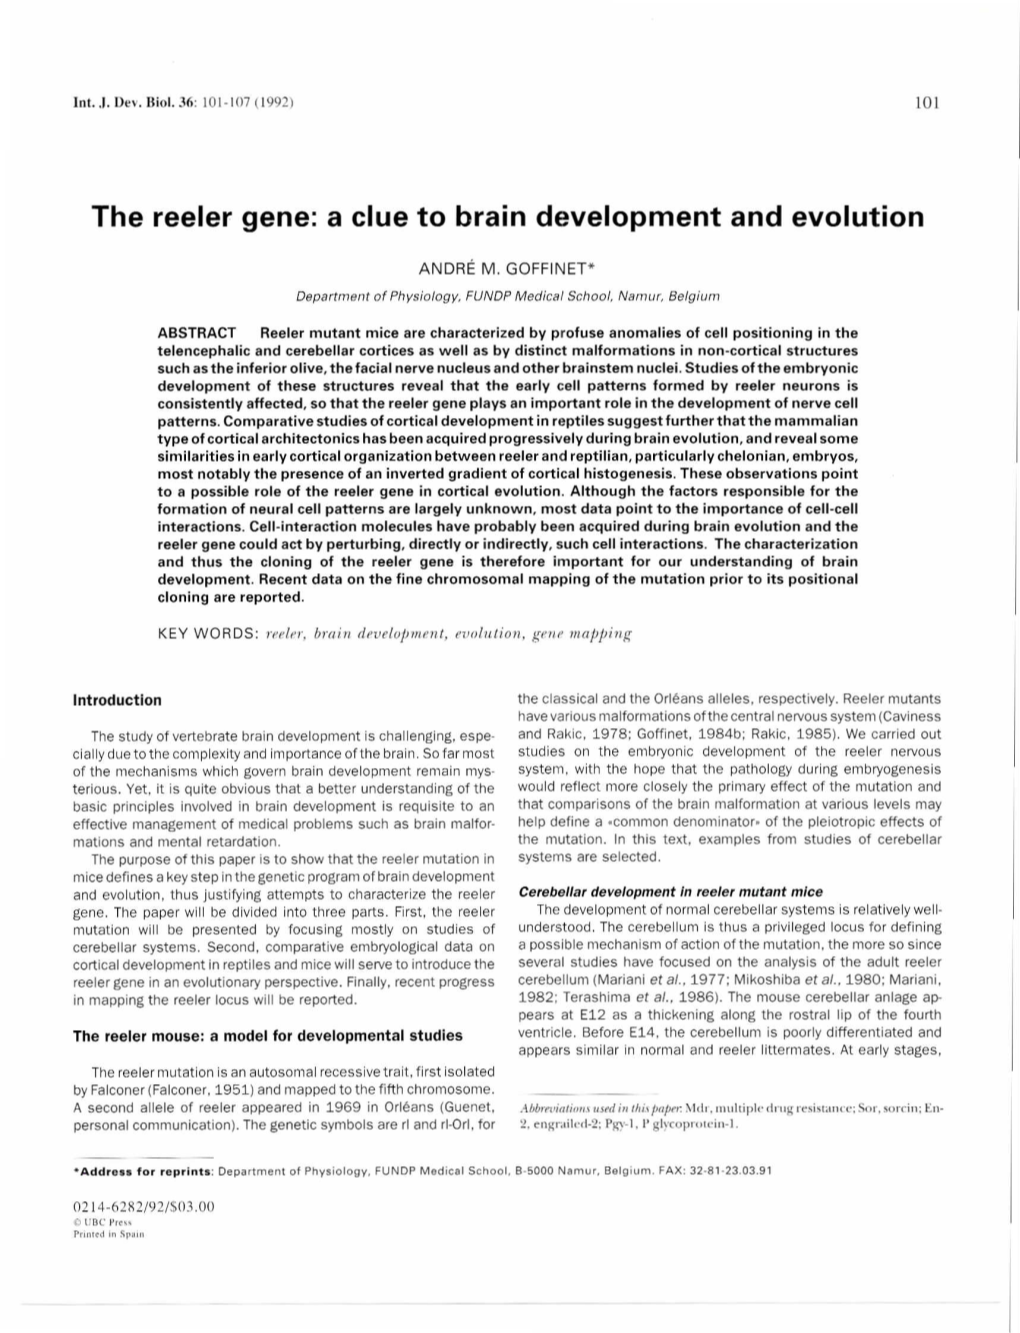 The Reeler Gene: a Clue to Brain Development and Evolution